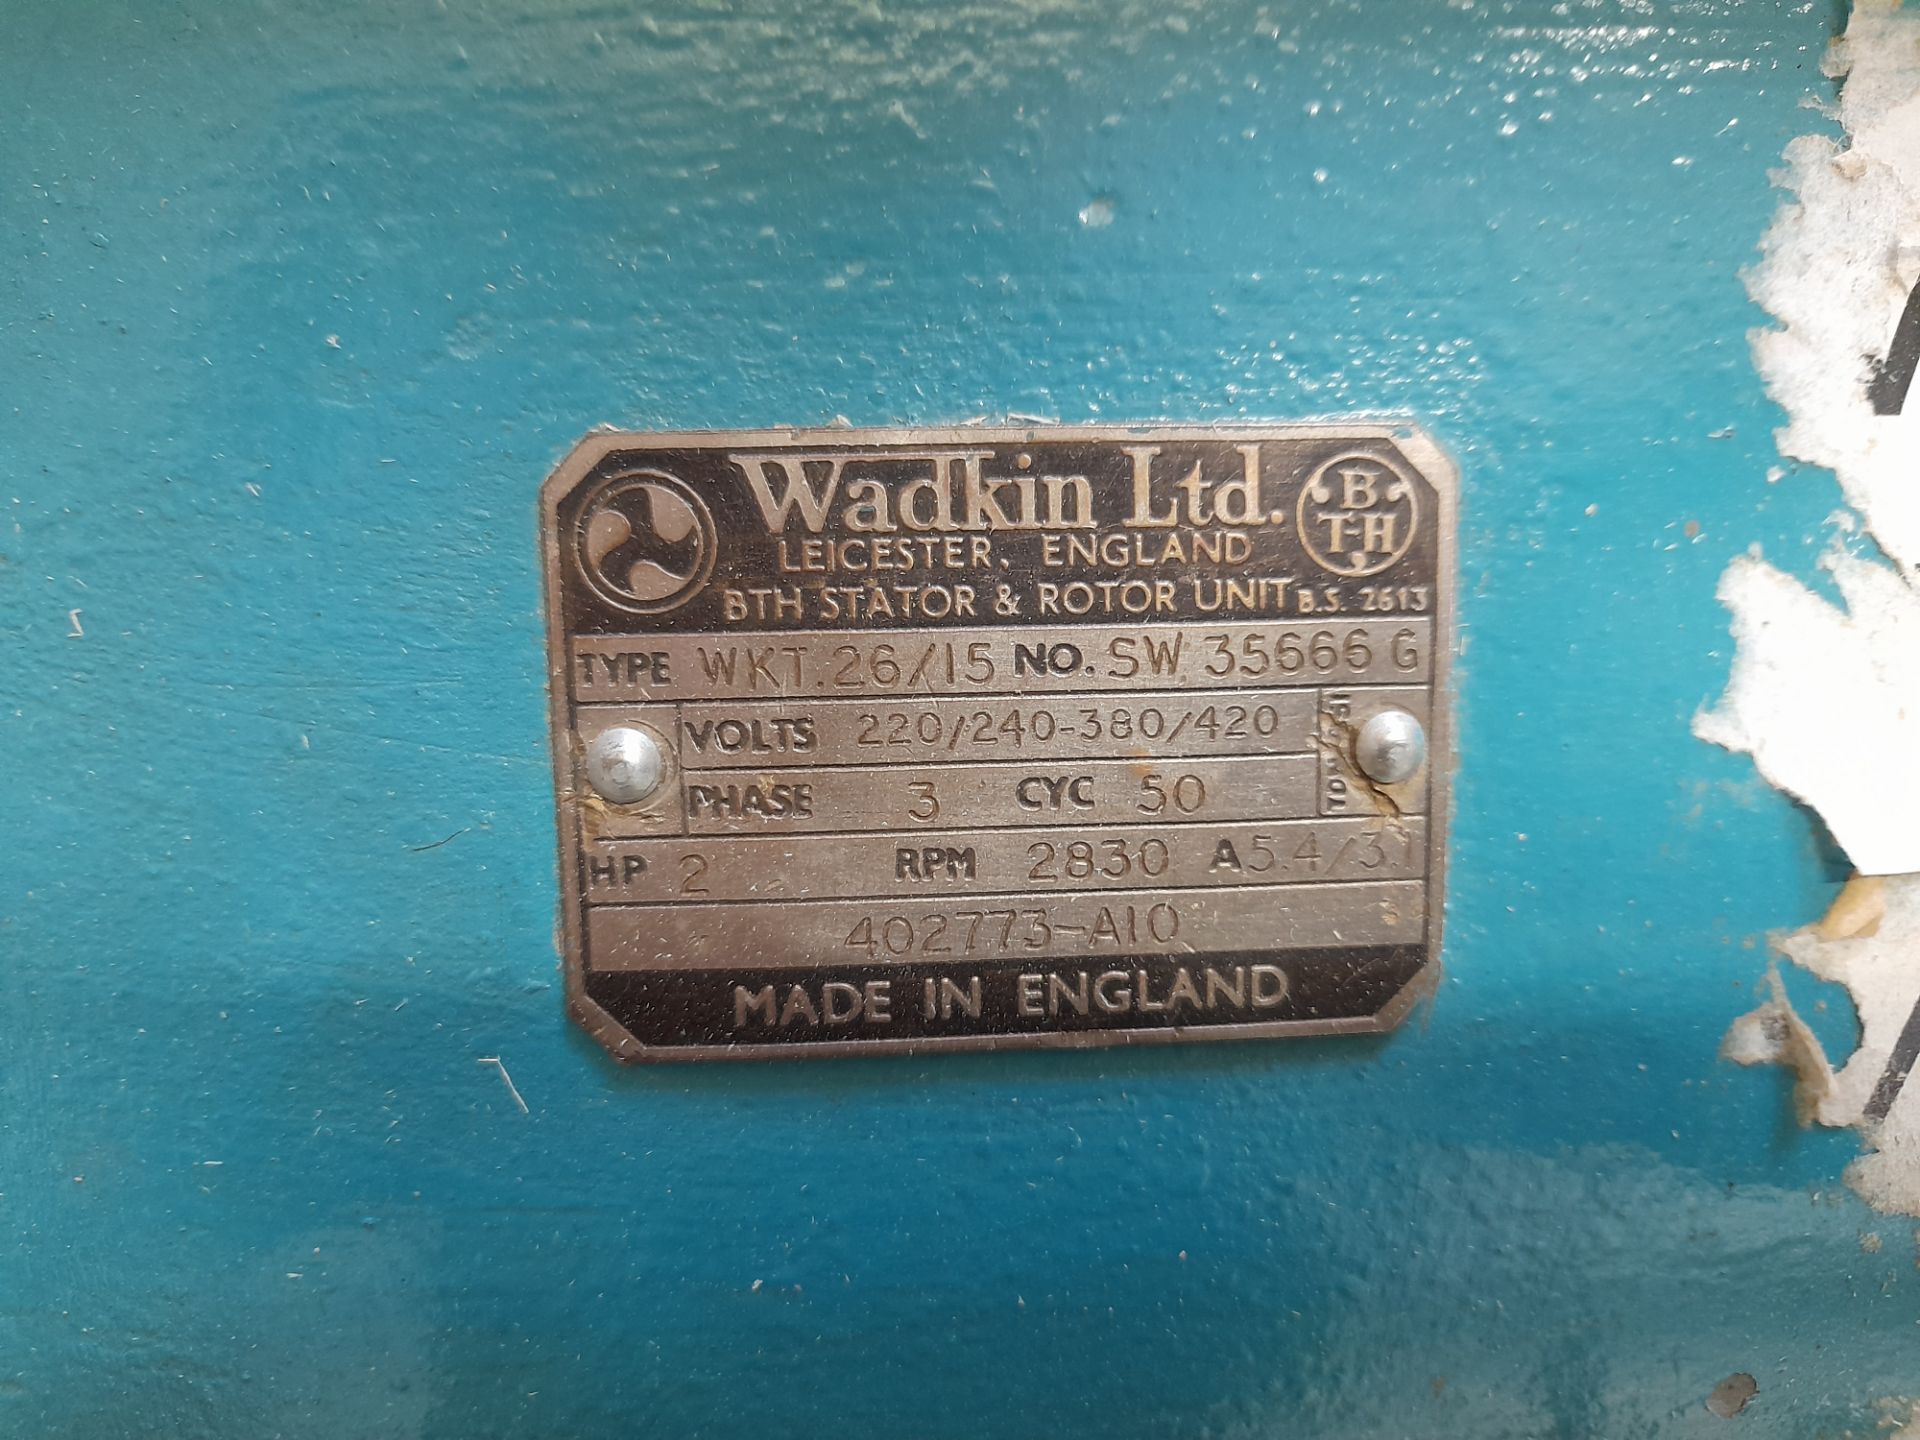 Wadkin Single End Tenoner, with top and bottom scriber (Serial Number EKA-1279) - Image 8 of 11